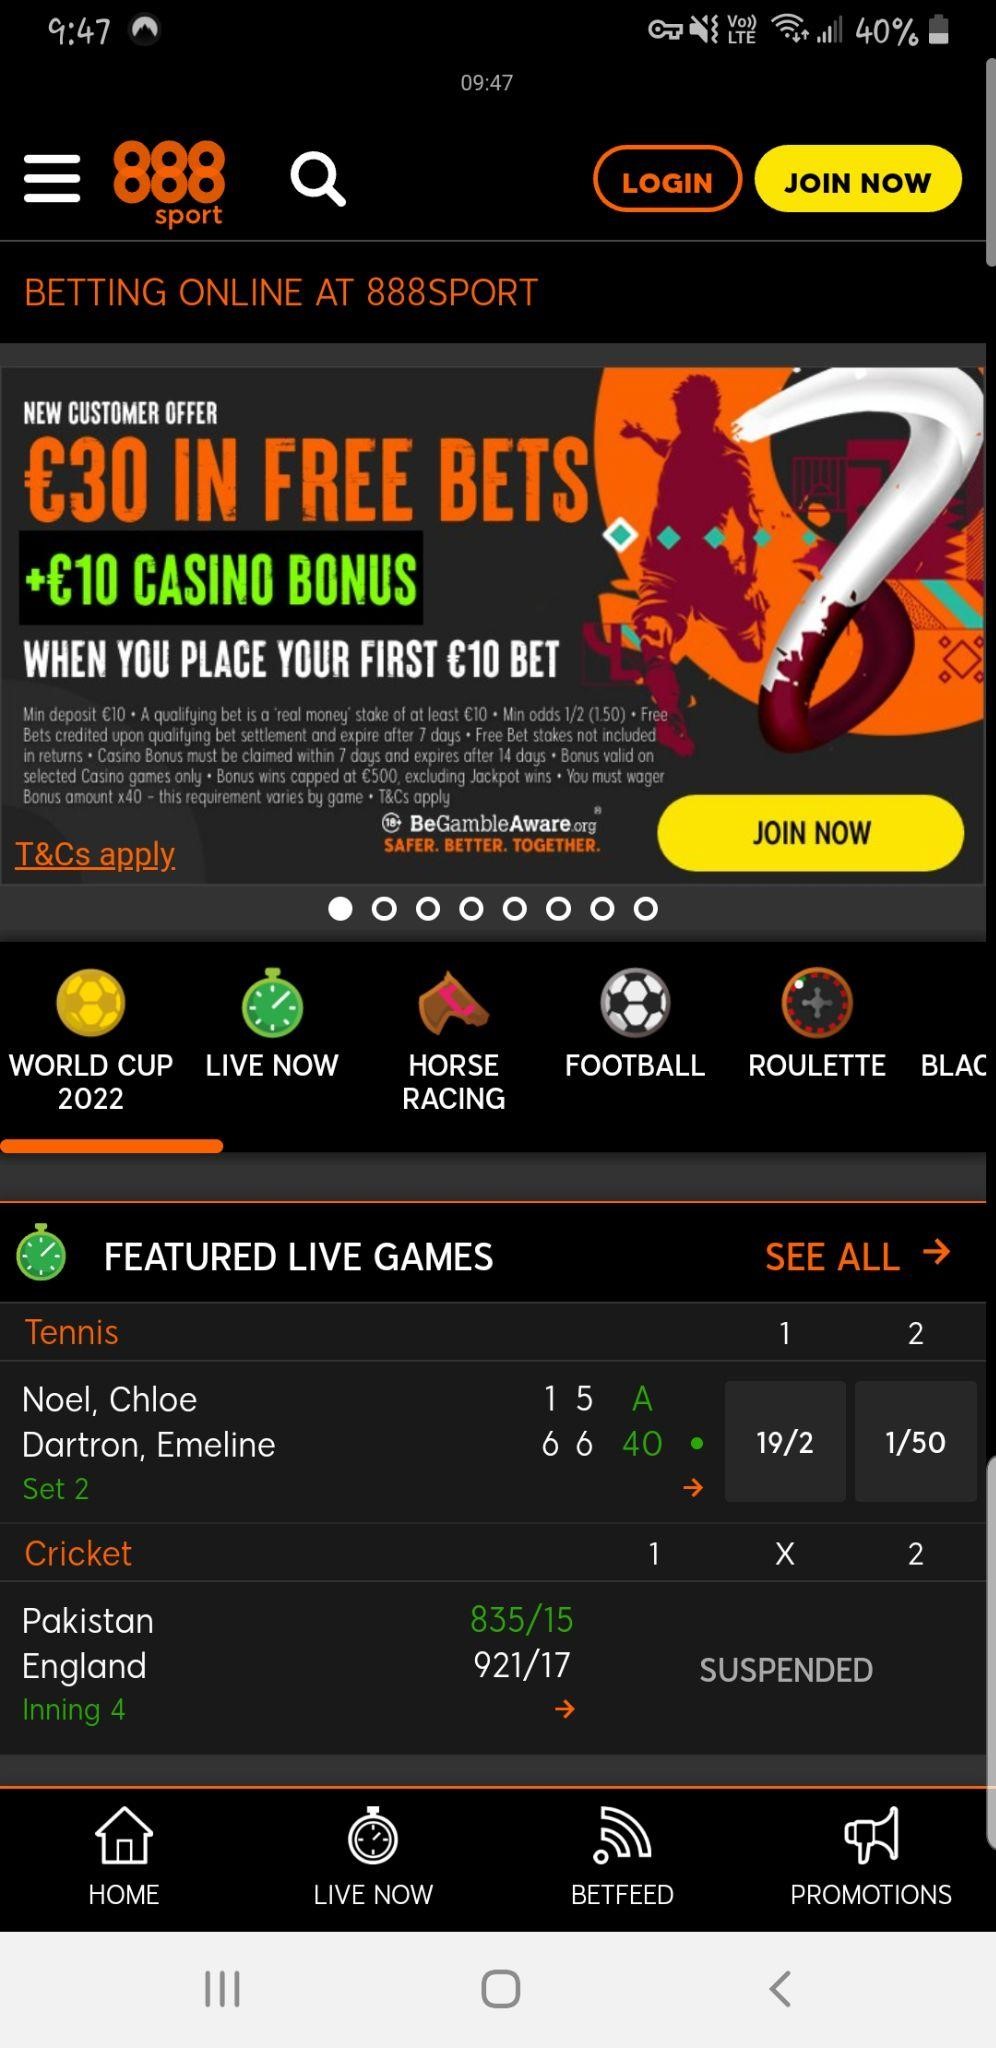 888sport's Betting App